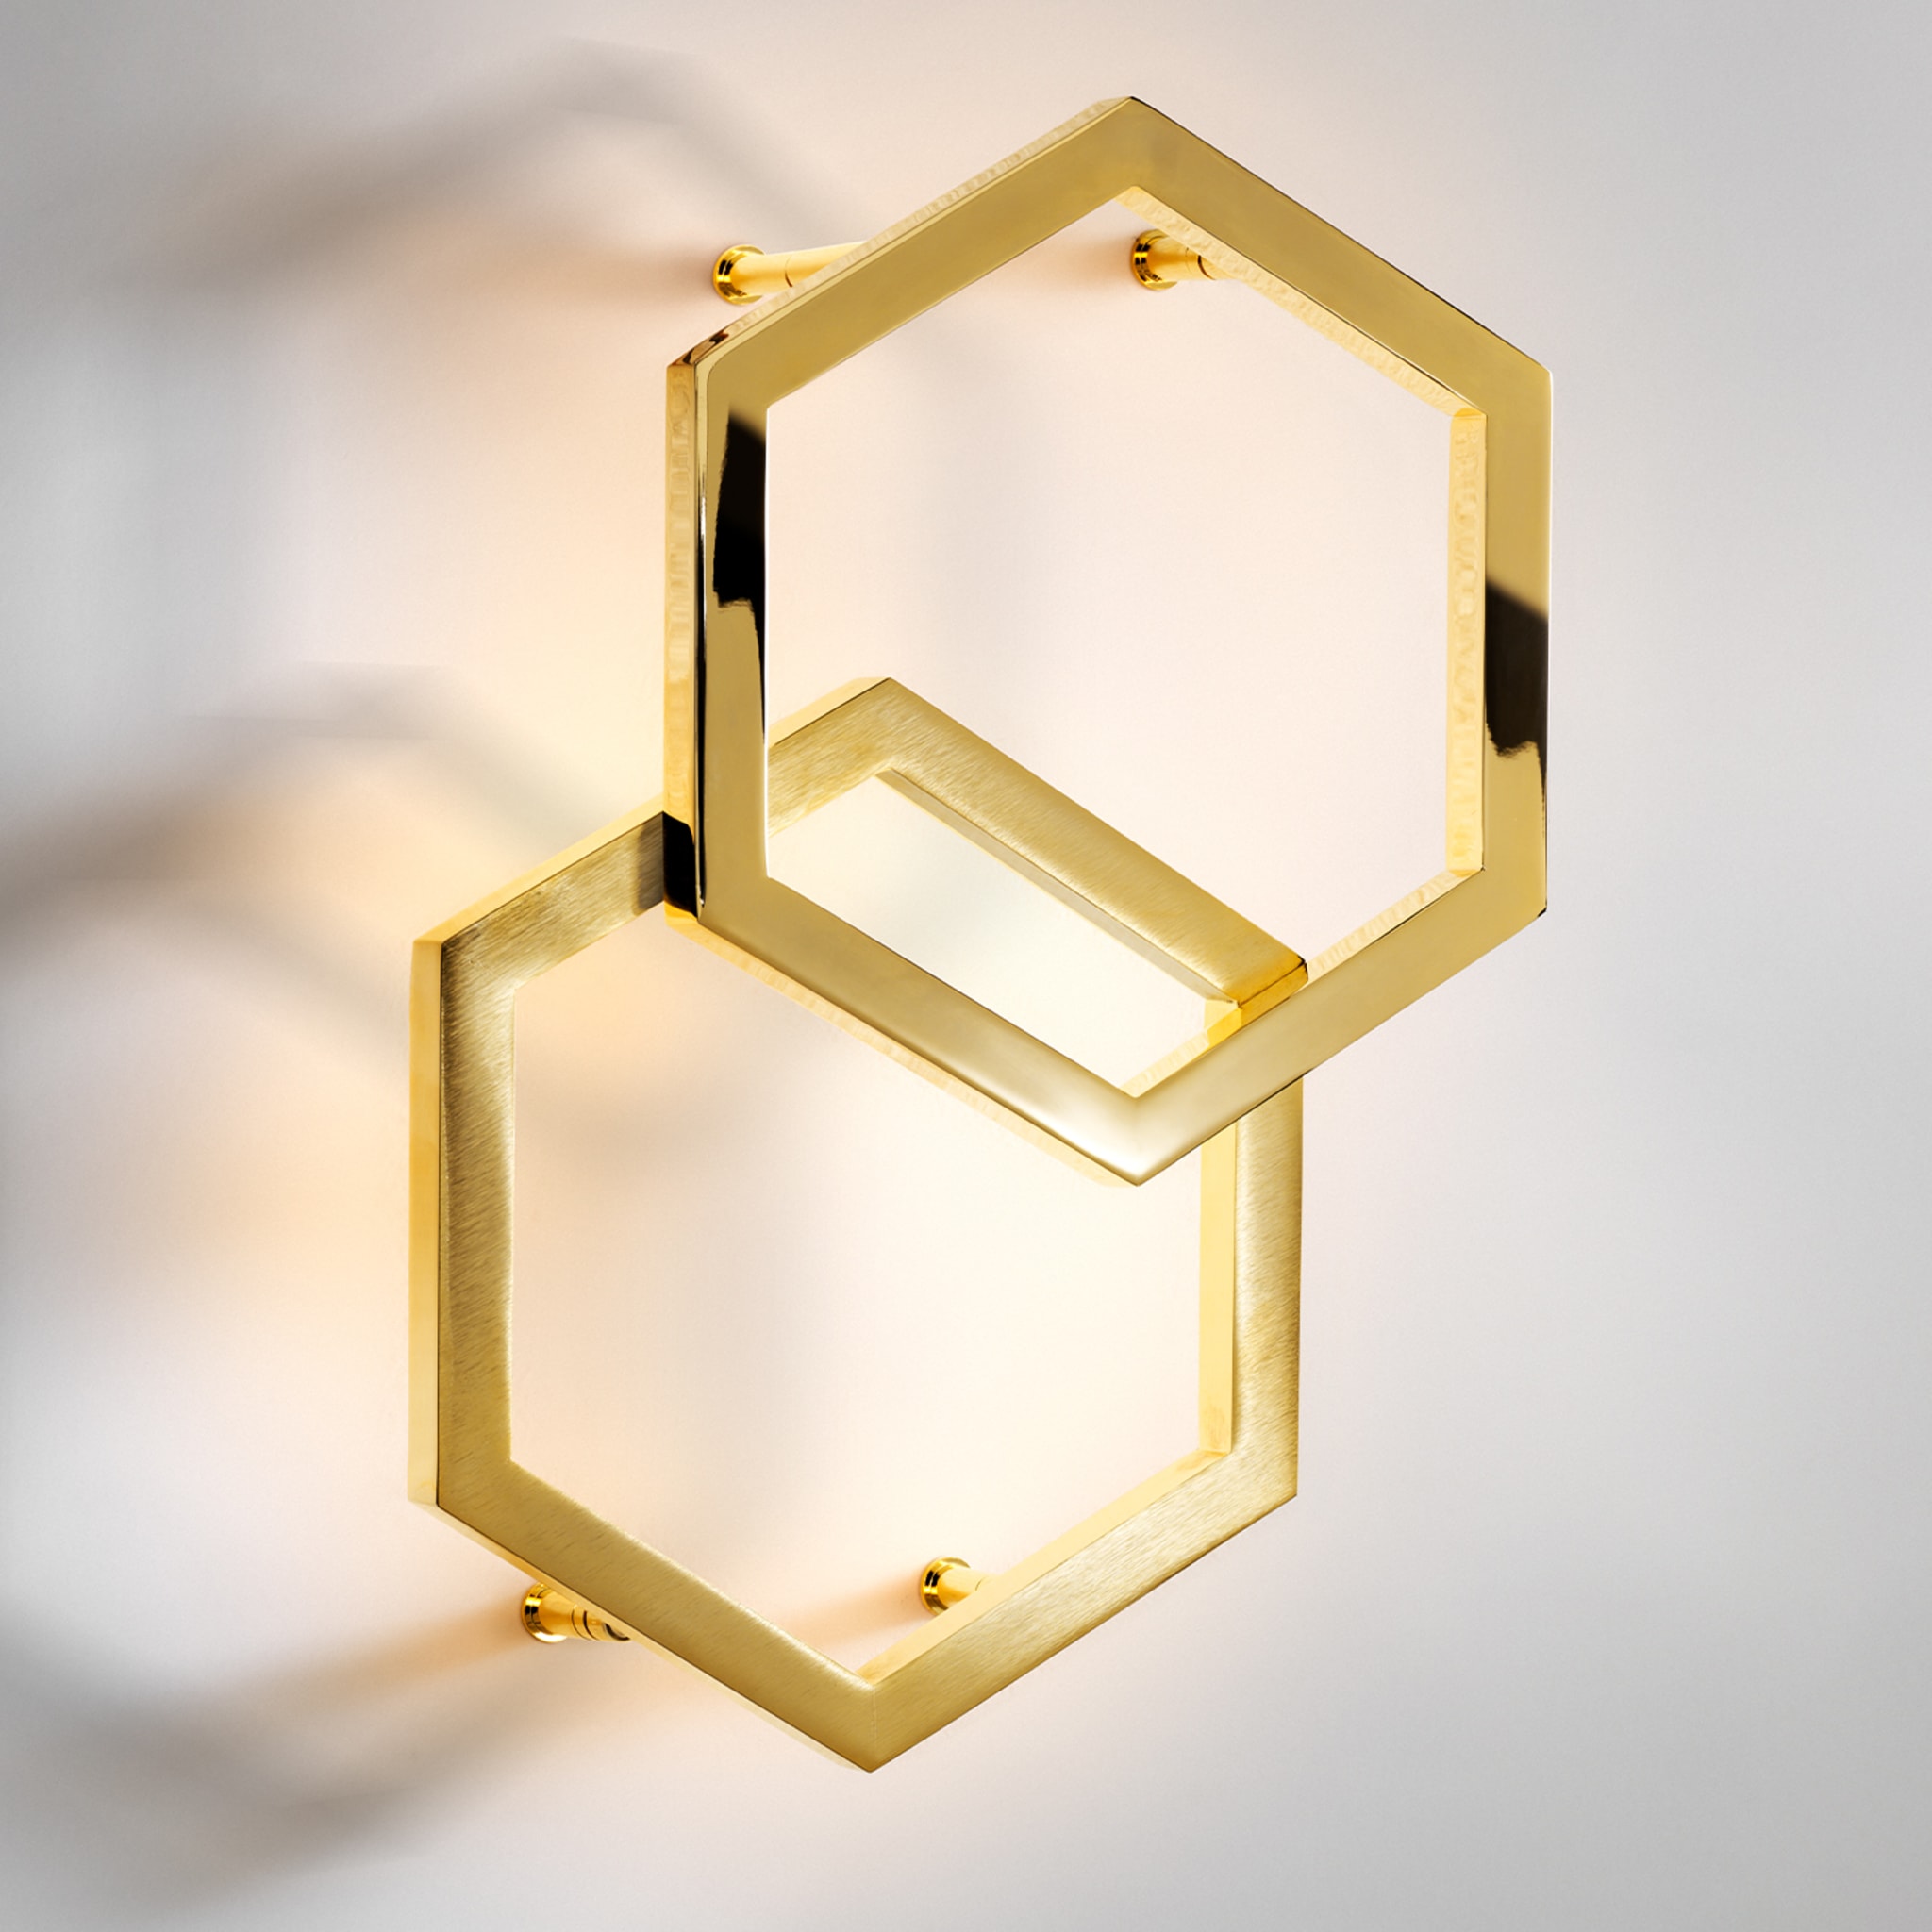 Hexagon Golden Sconce #2 - Alternative view 1